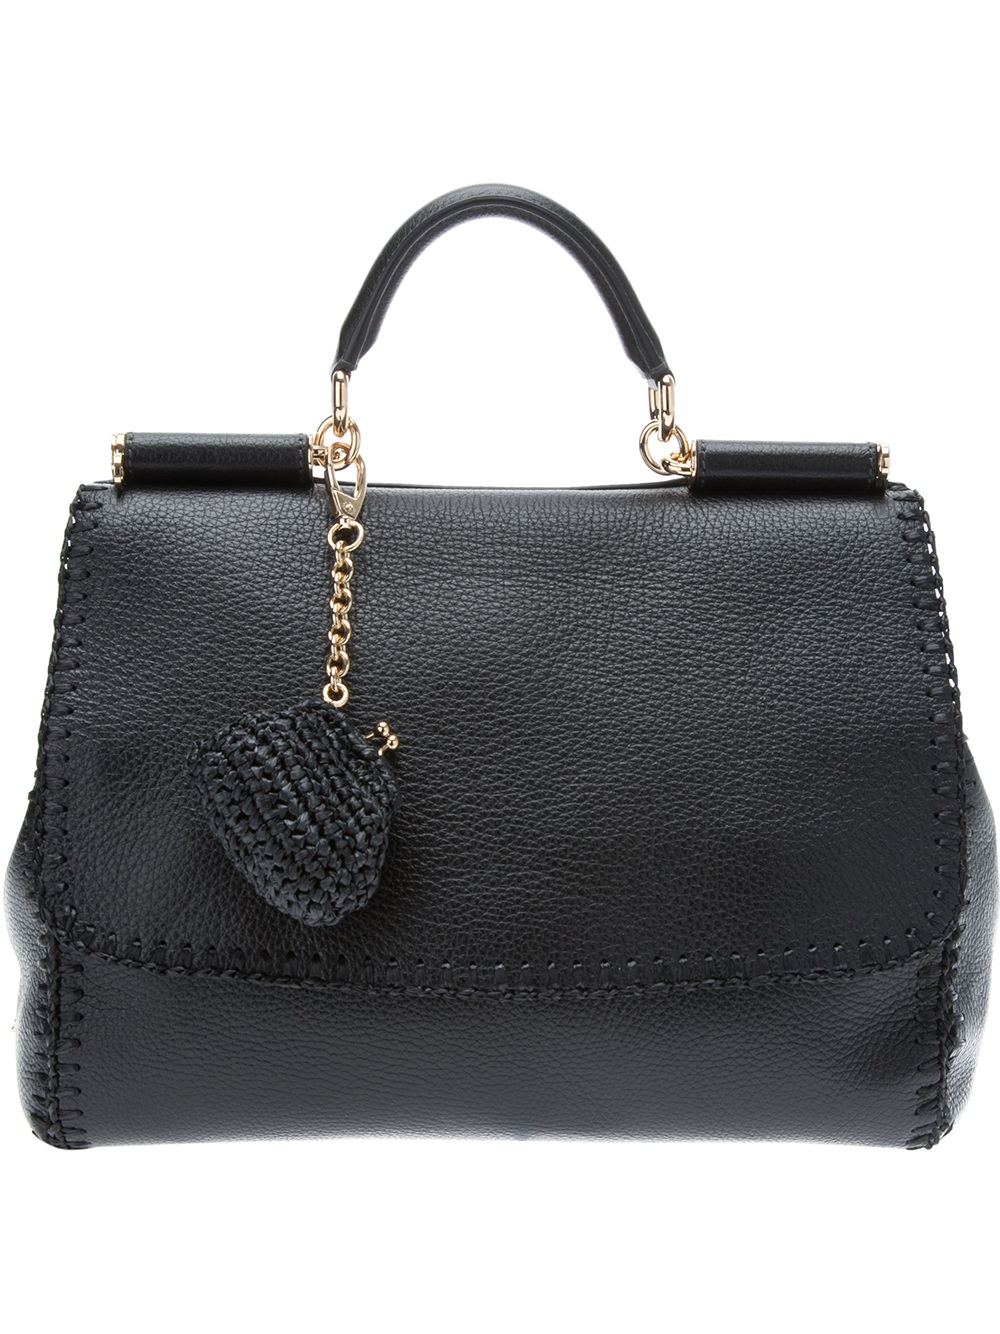 Dolce & Gabbana Tote Bag in Black | Lyst